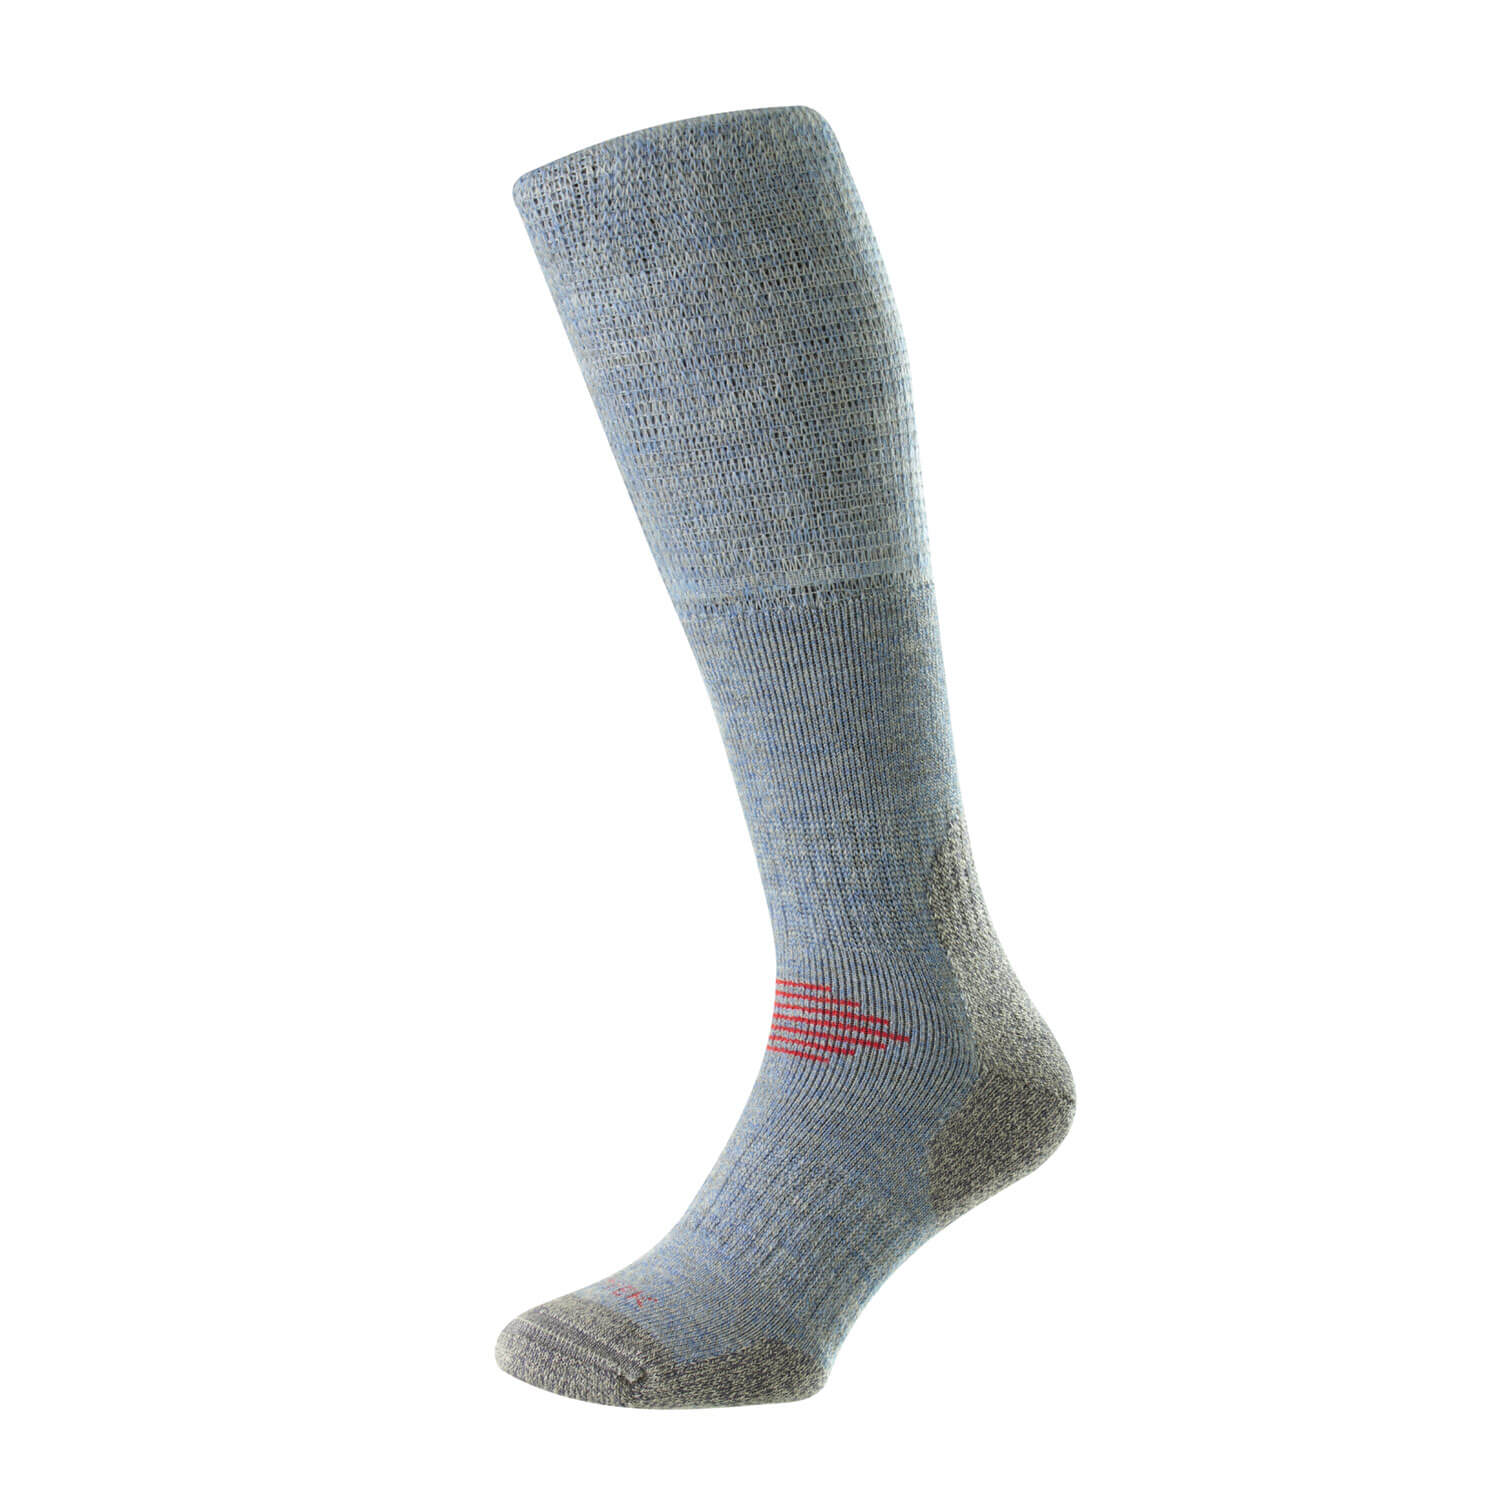 Protrek Mountain Comfort Top Socks - Denim Grey 1 Shaws Department Stores